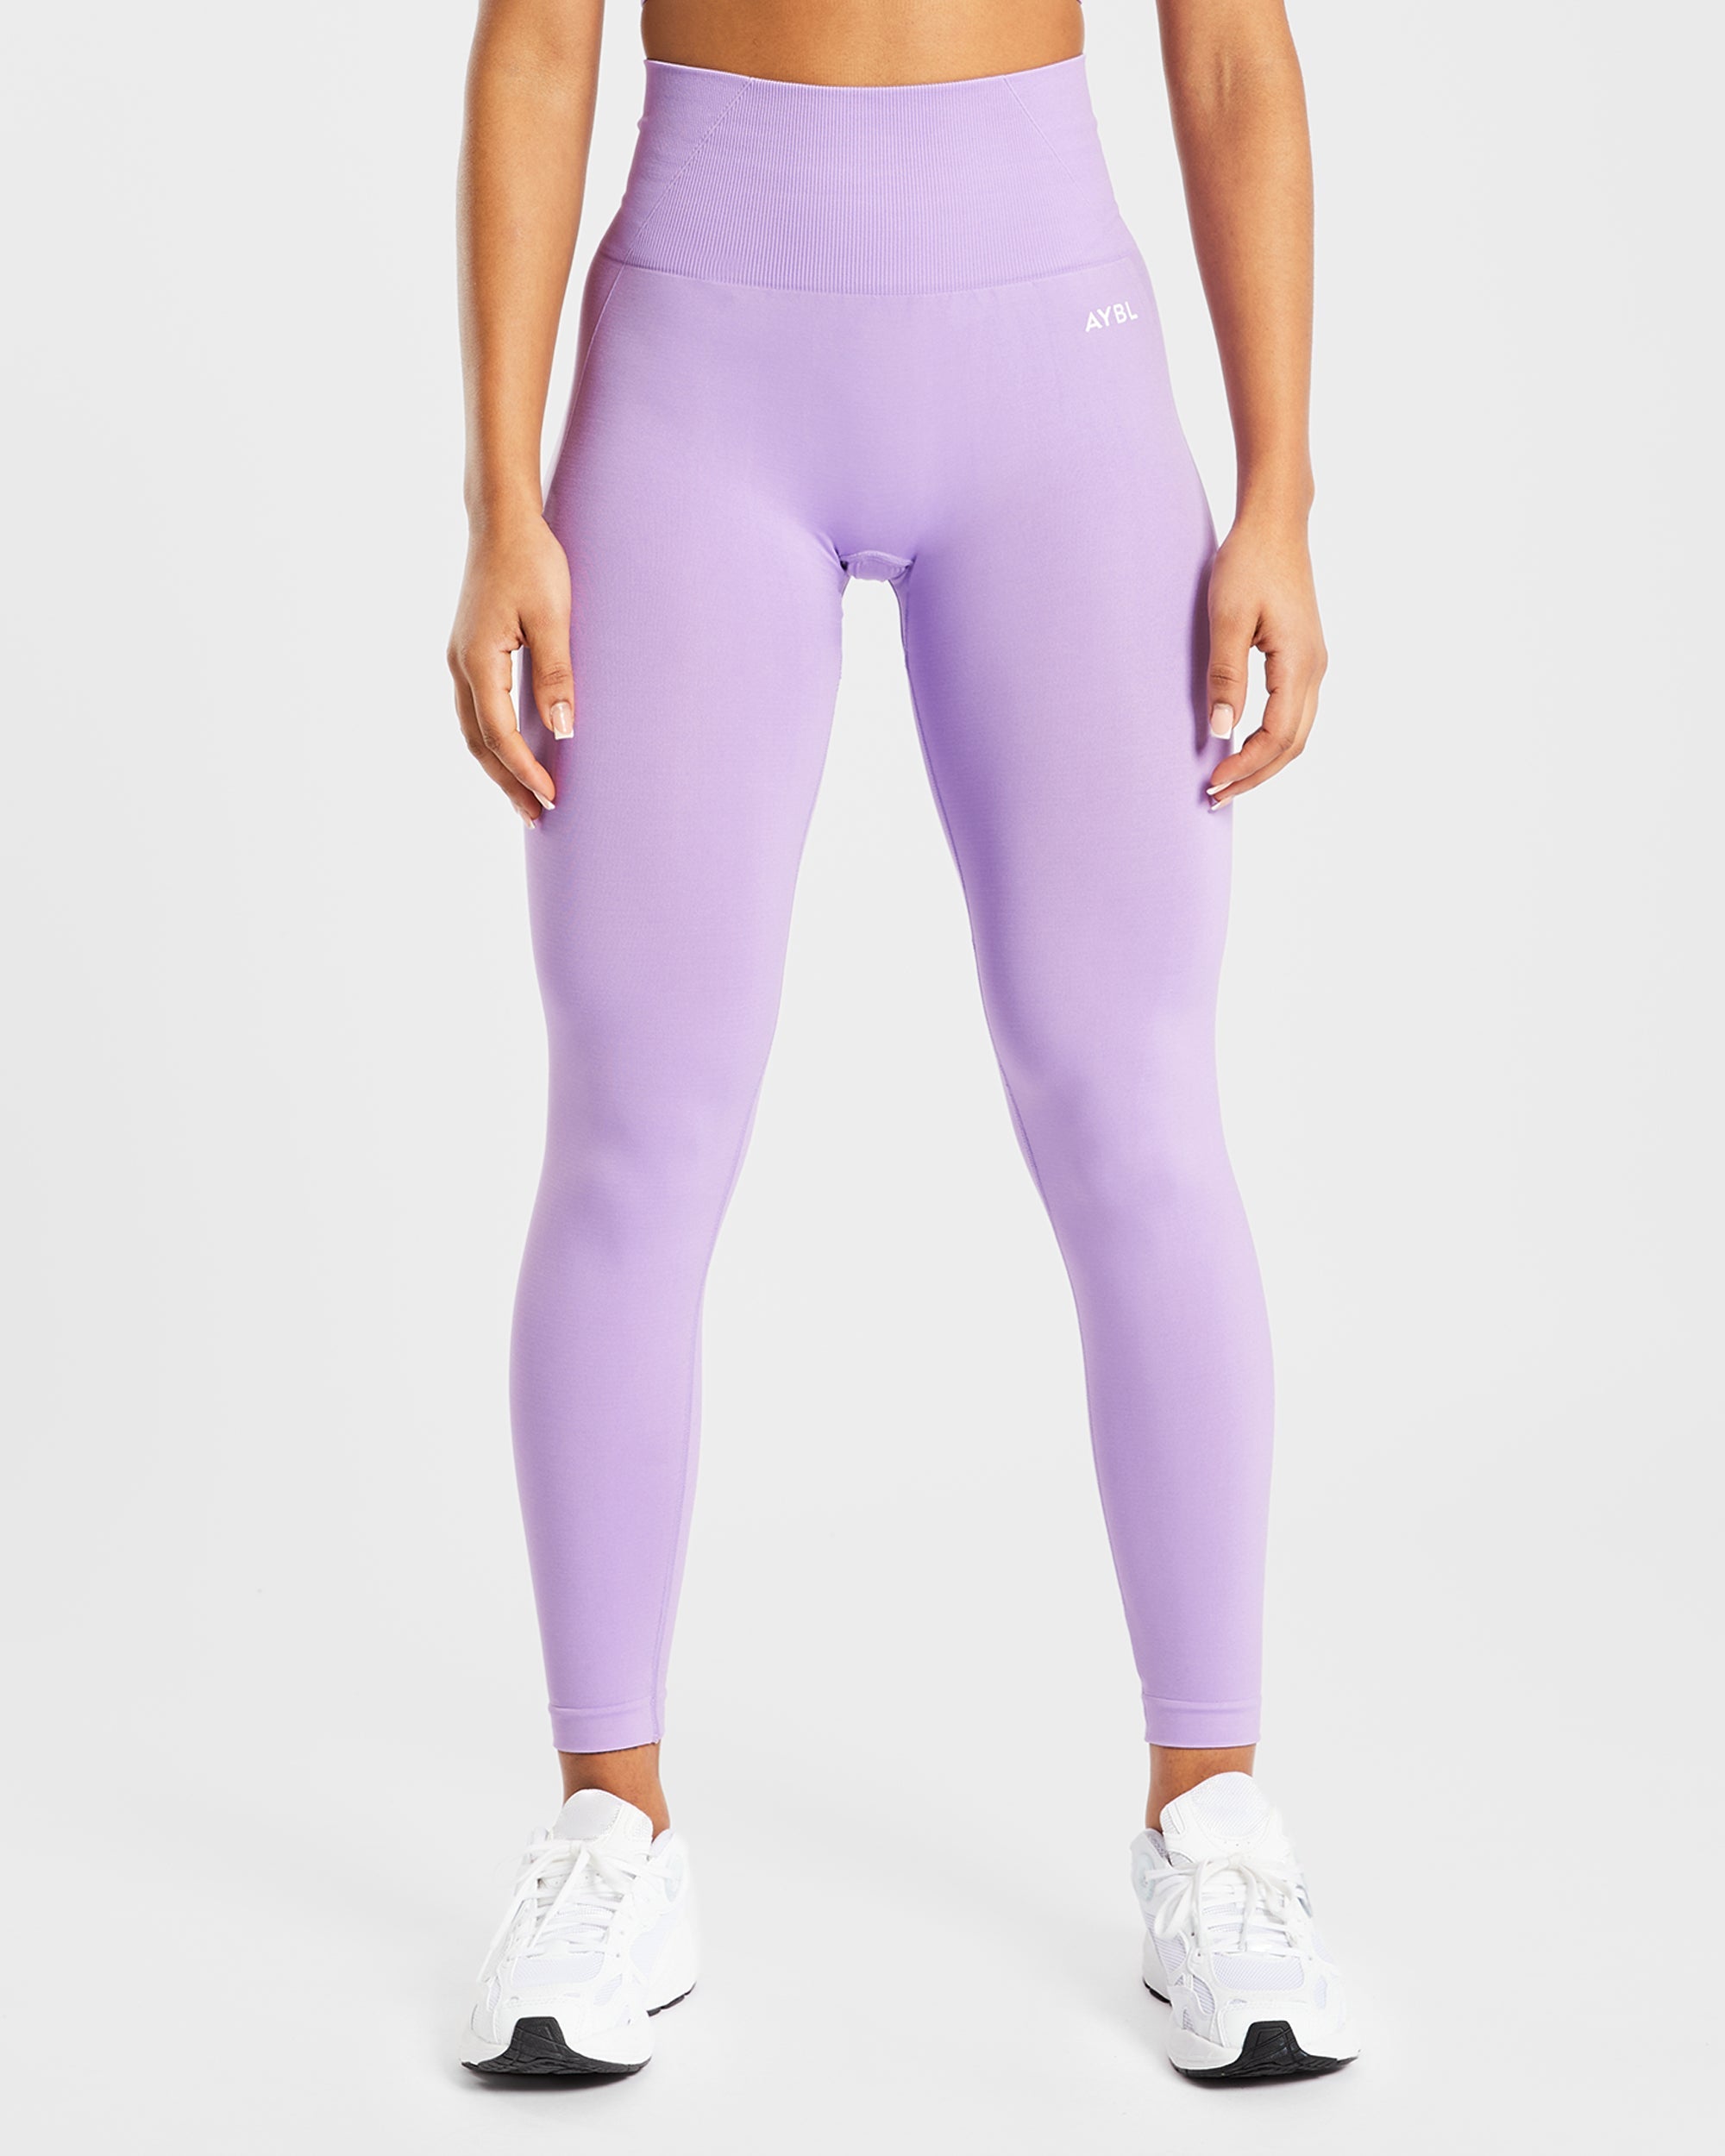 Bo+Tee booty contouring purple workout leggings size XL - $25